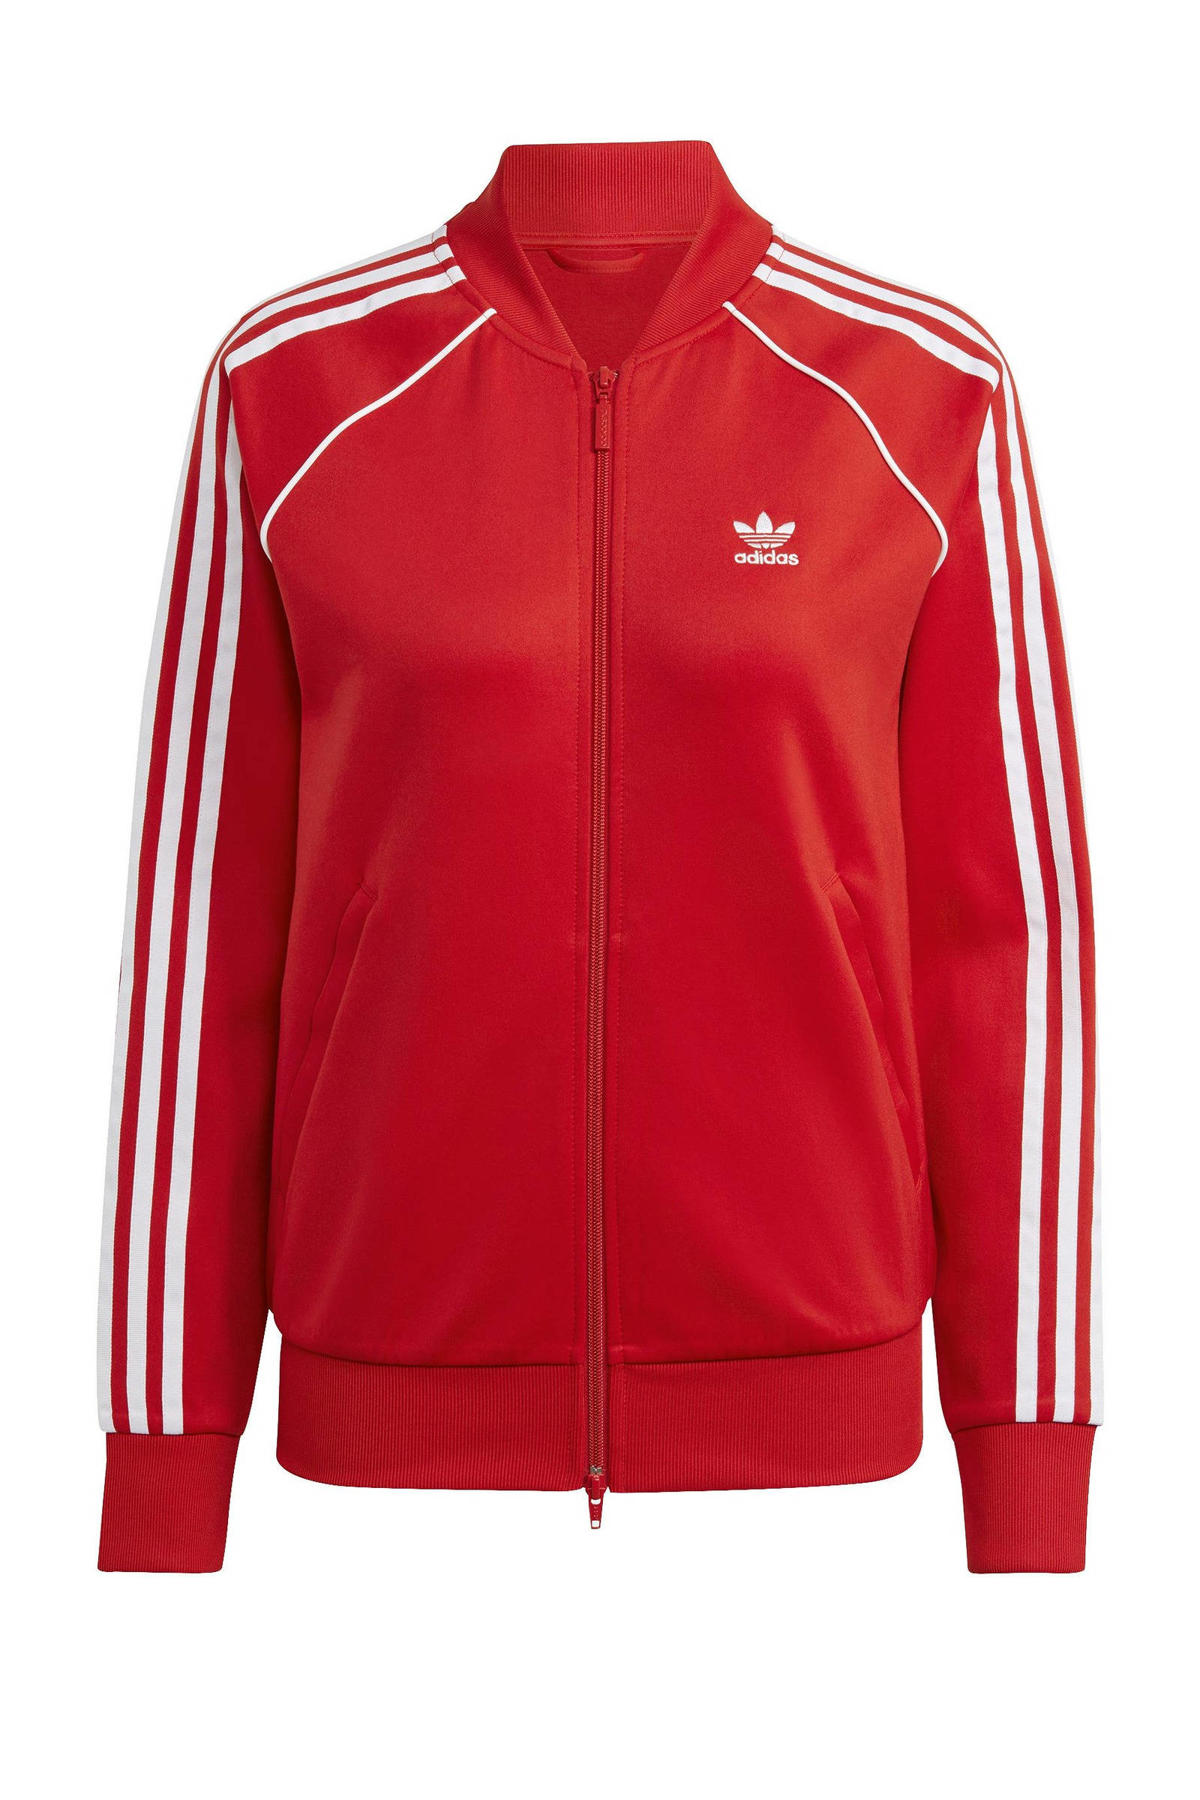 adidas Originals vest rood wehkamp